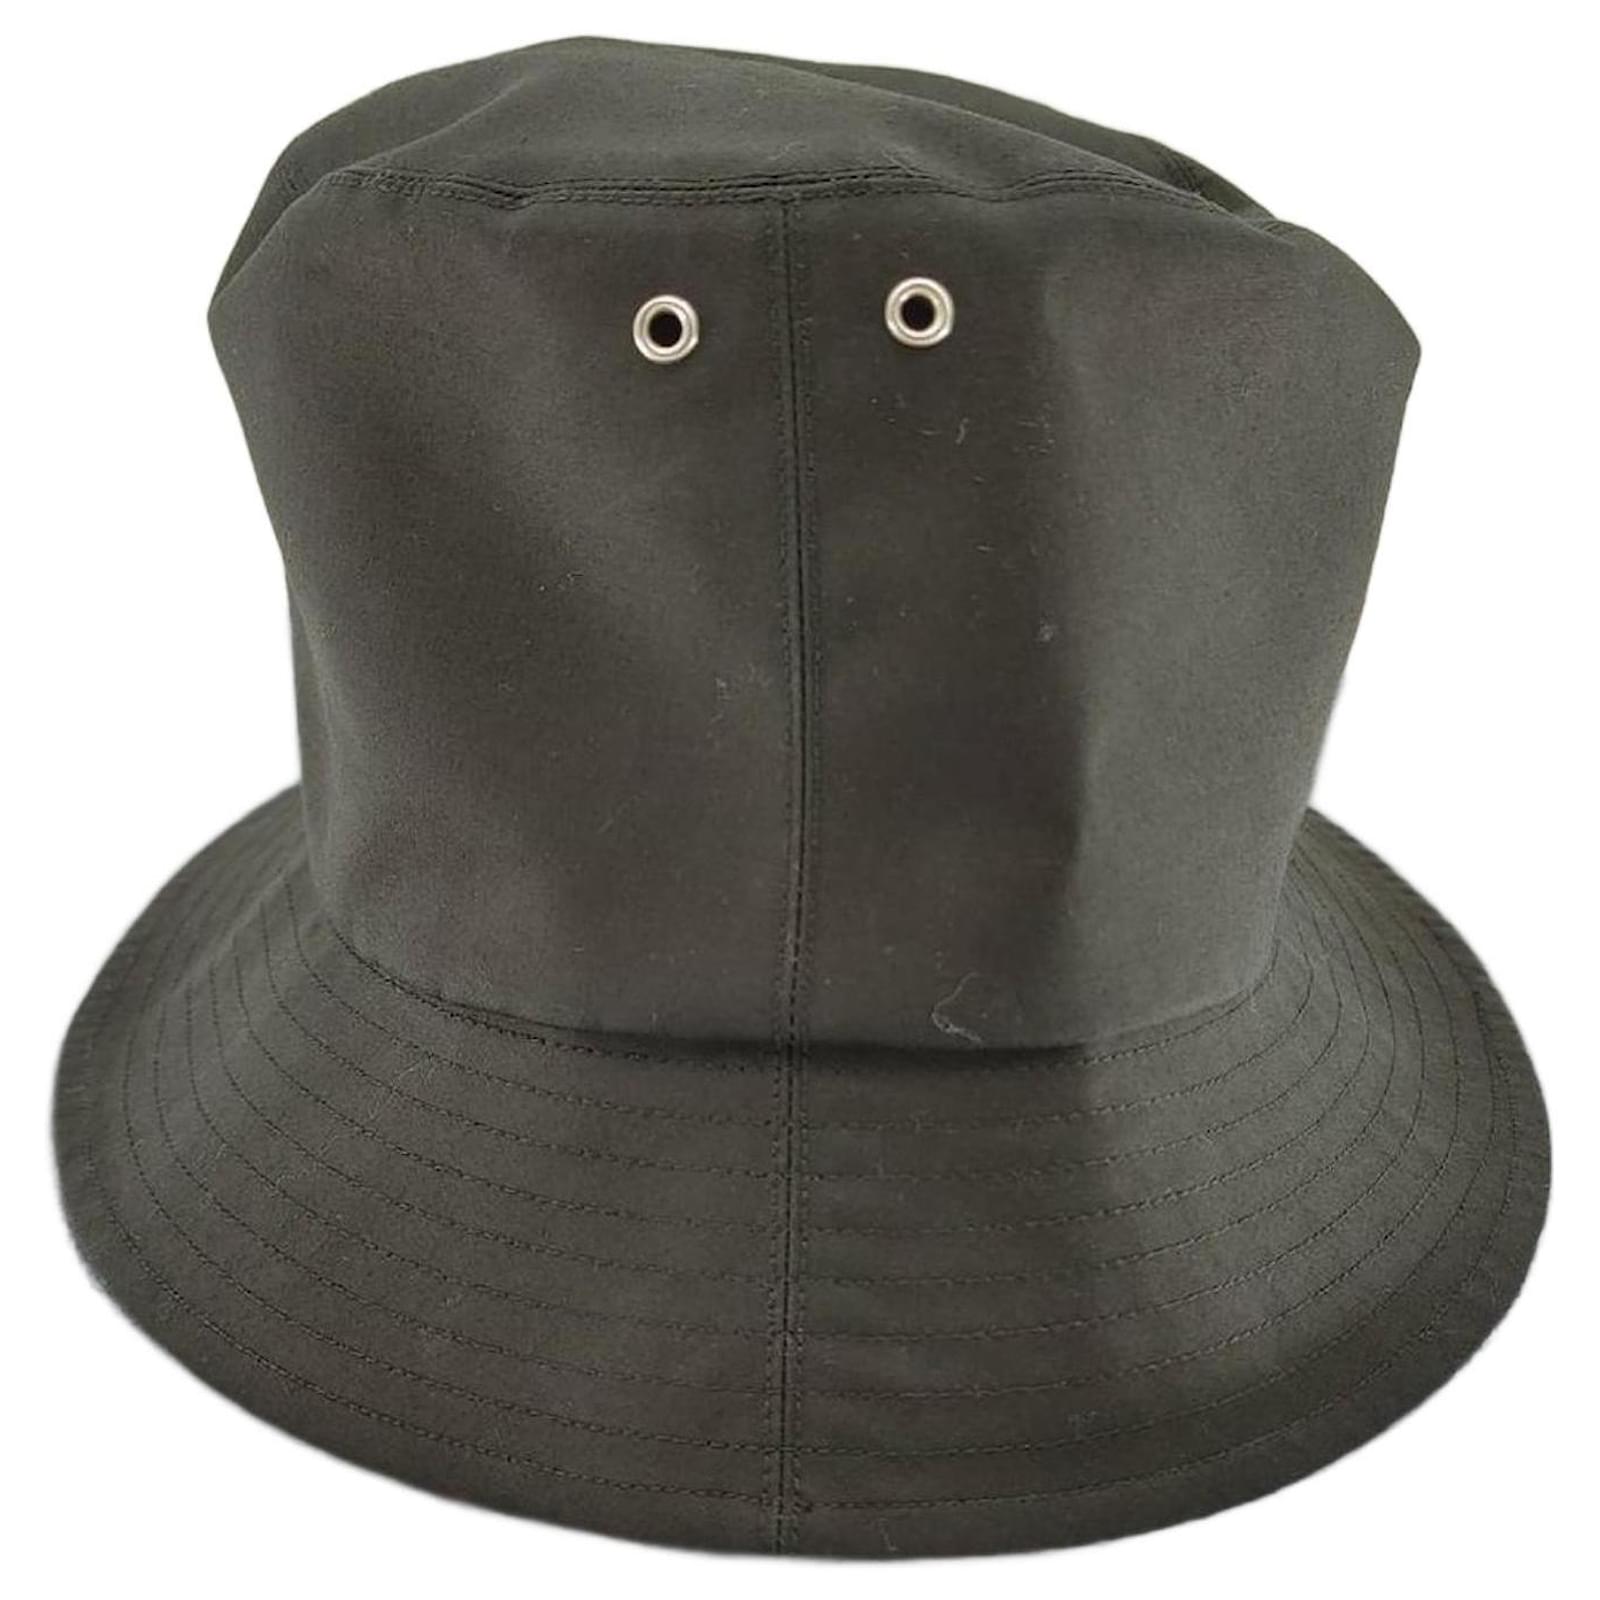 Dior Men's Oblique Bucket Hat